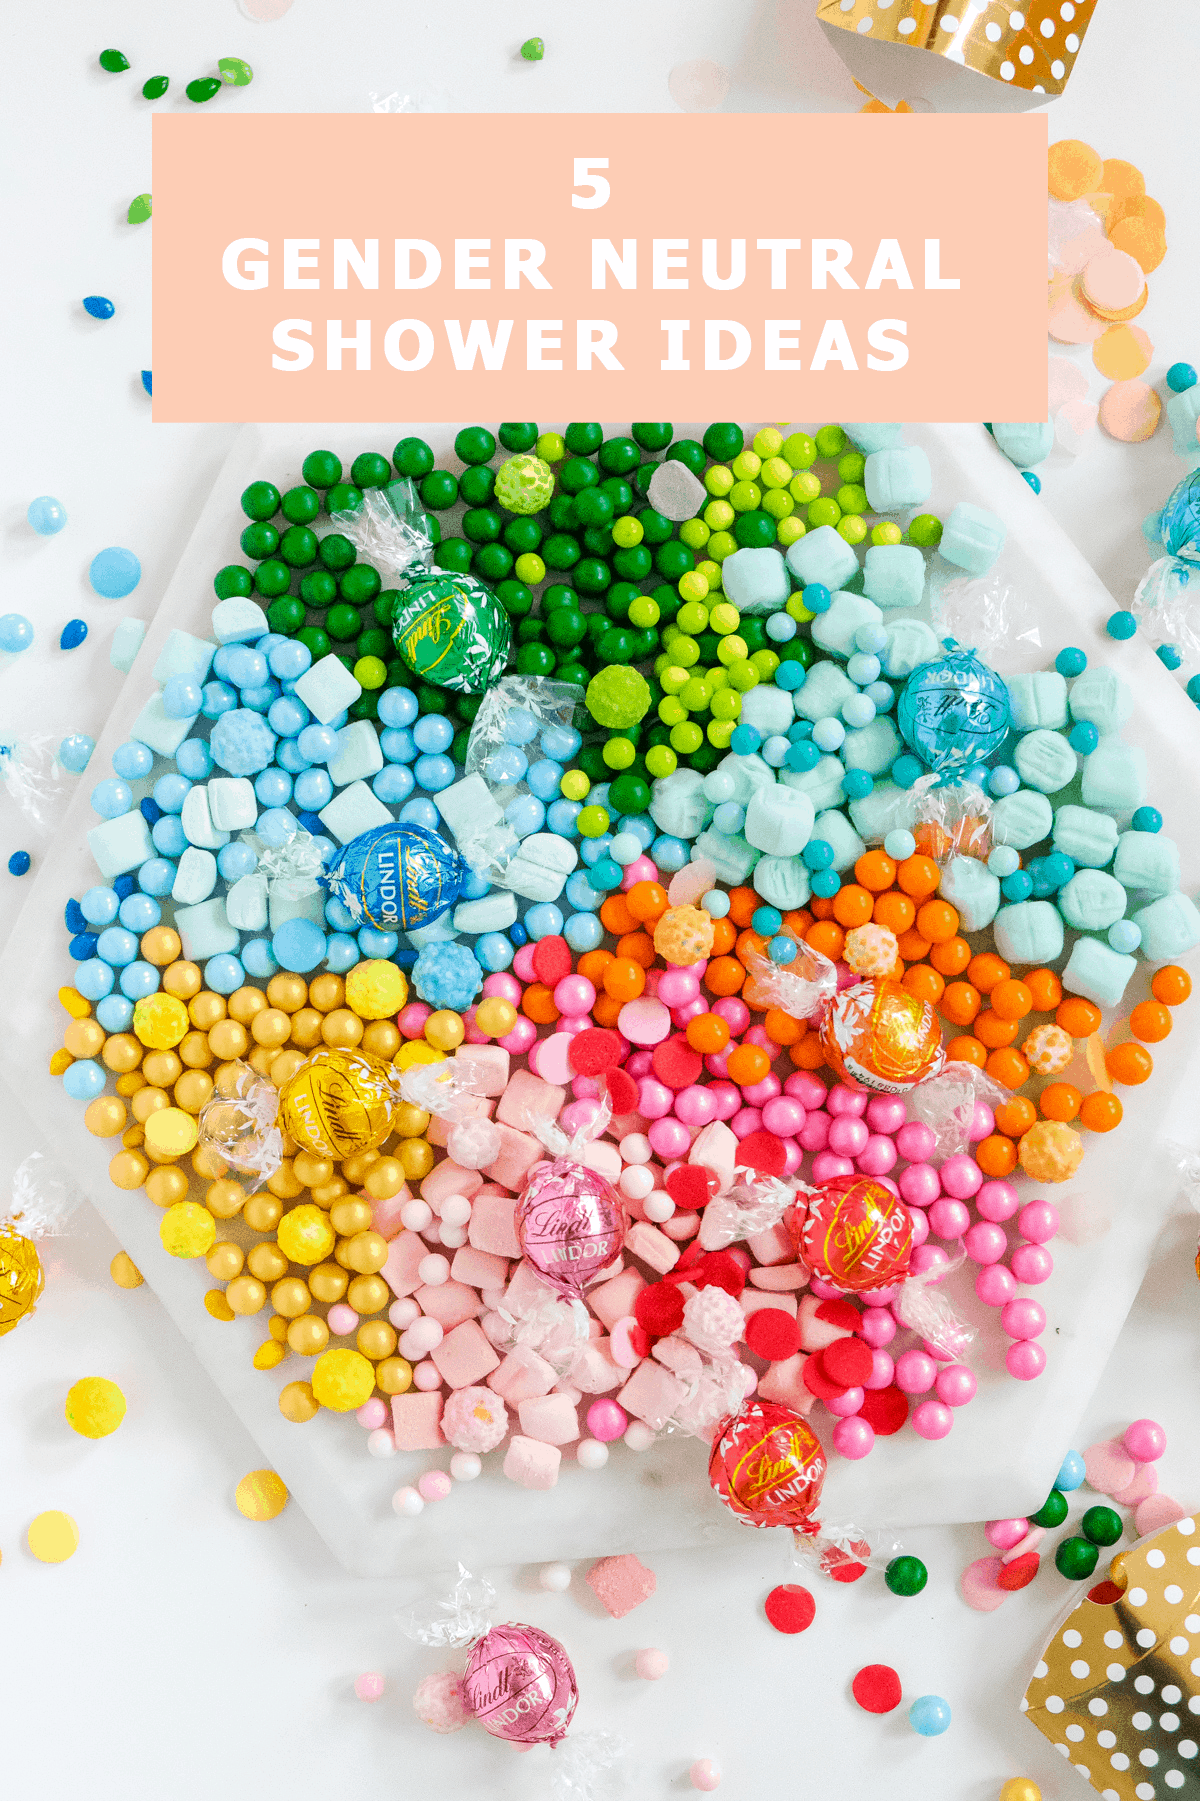 5 DIY Gender Neutral Baby Shower Ideas by top Houston lifestyle blogger Ashley Rose of Sugar & Cloth